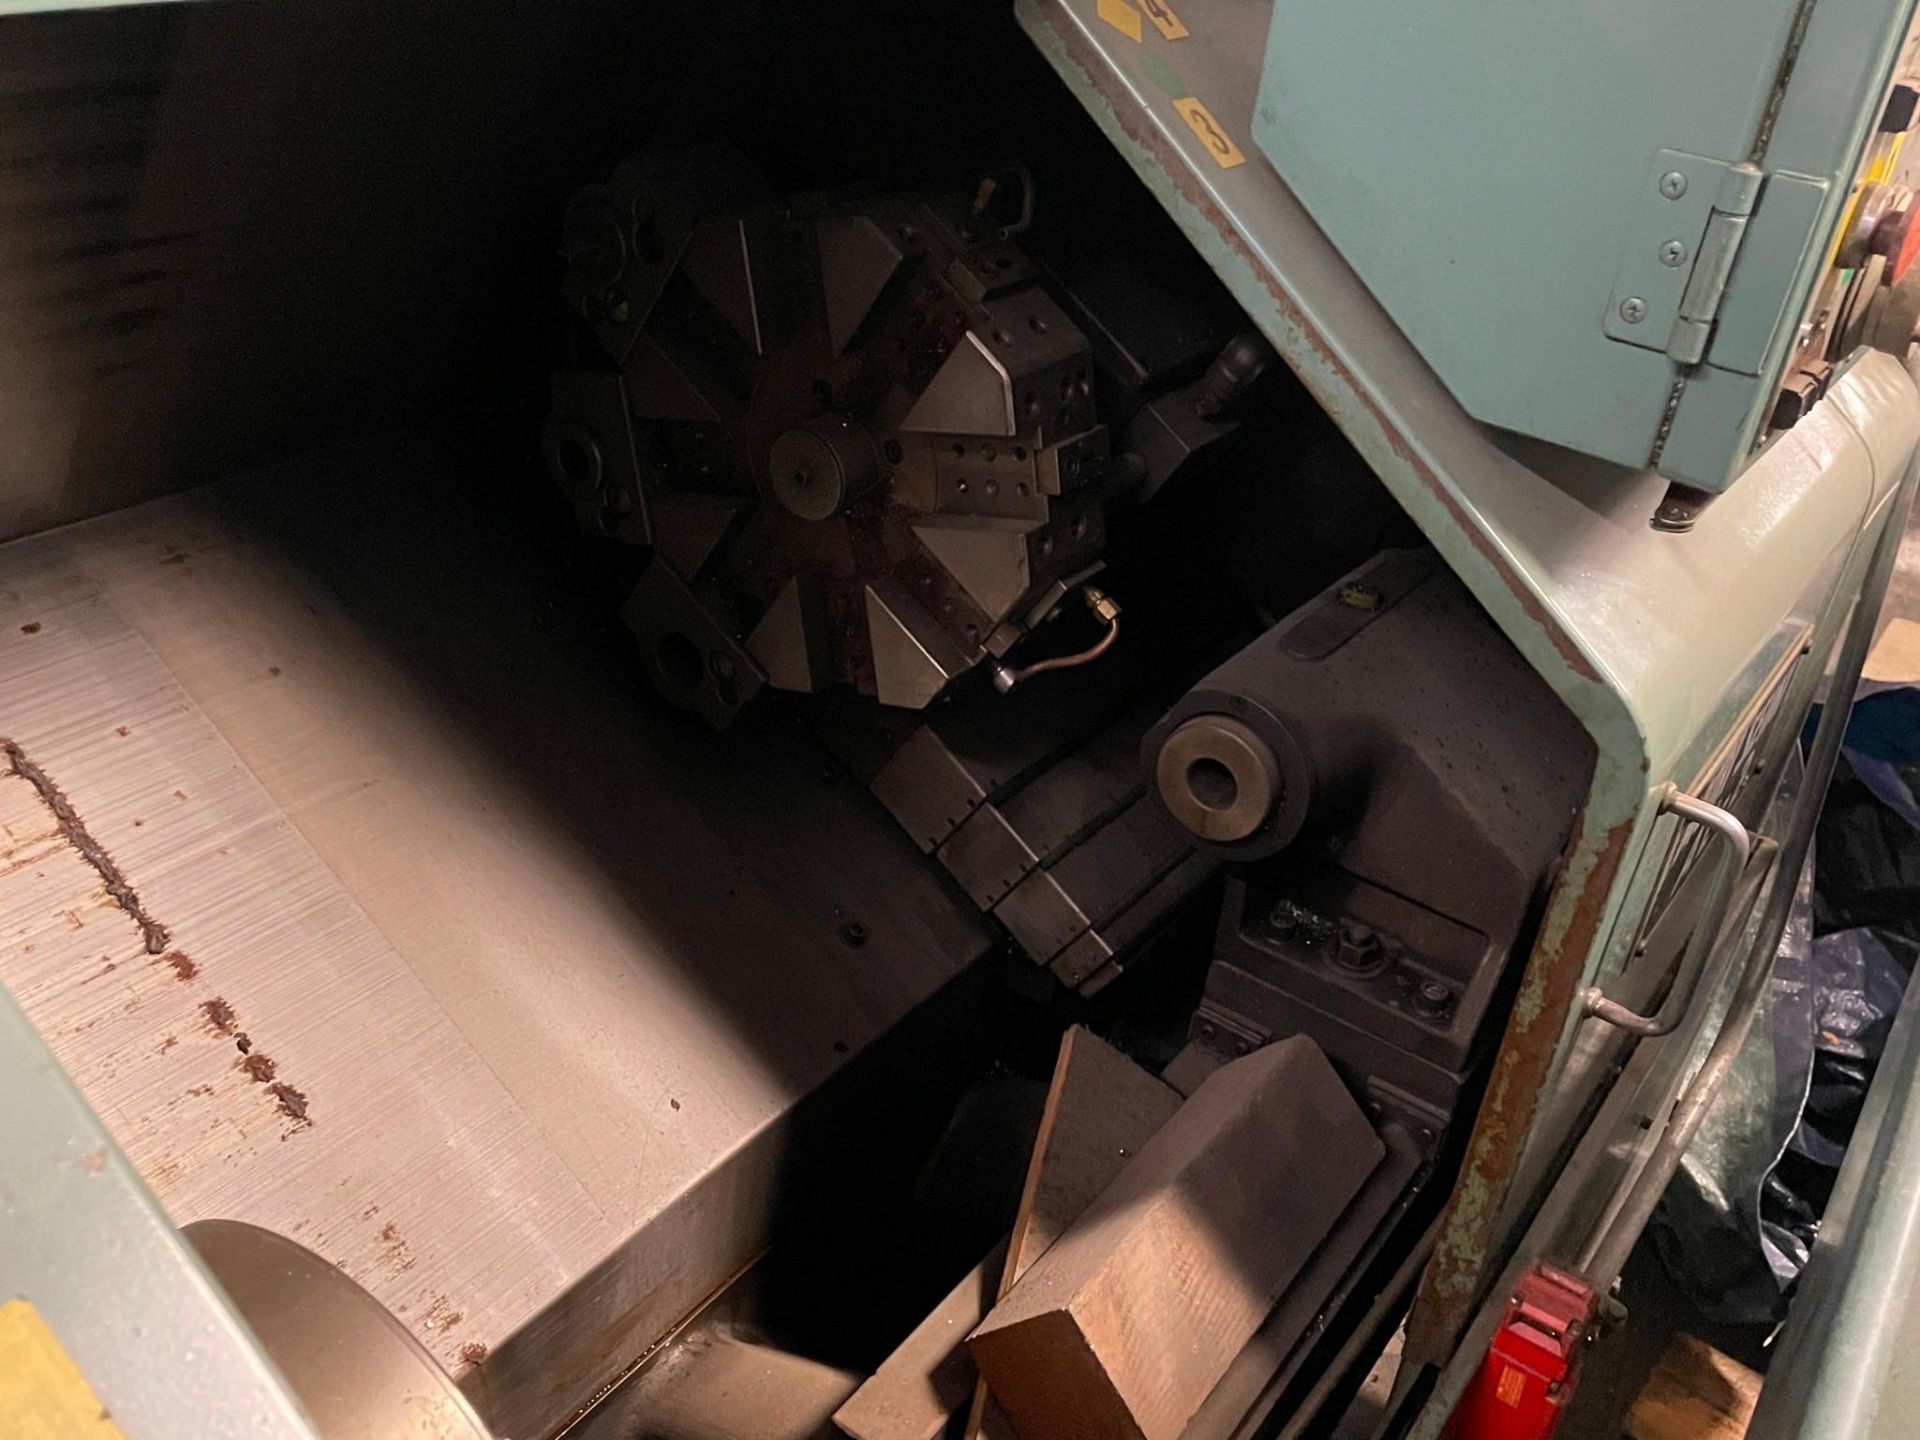 MORI SEIKI AL-2 BTM CNC TURNING CENTER W/ FANUC 10TE CONTROL, 8" CHUCK, TAILSTOCK - USED - Image 6 of 8